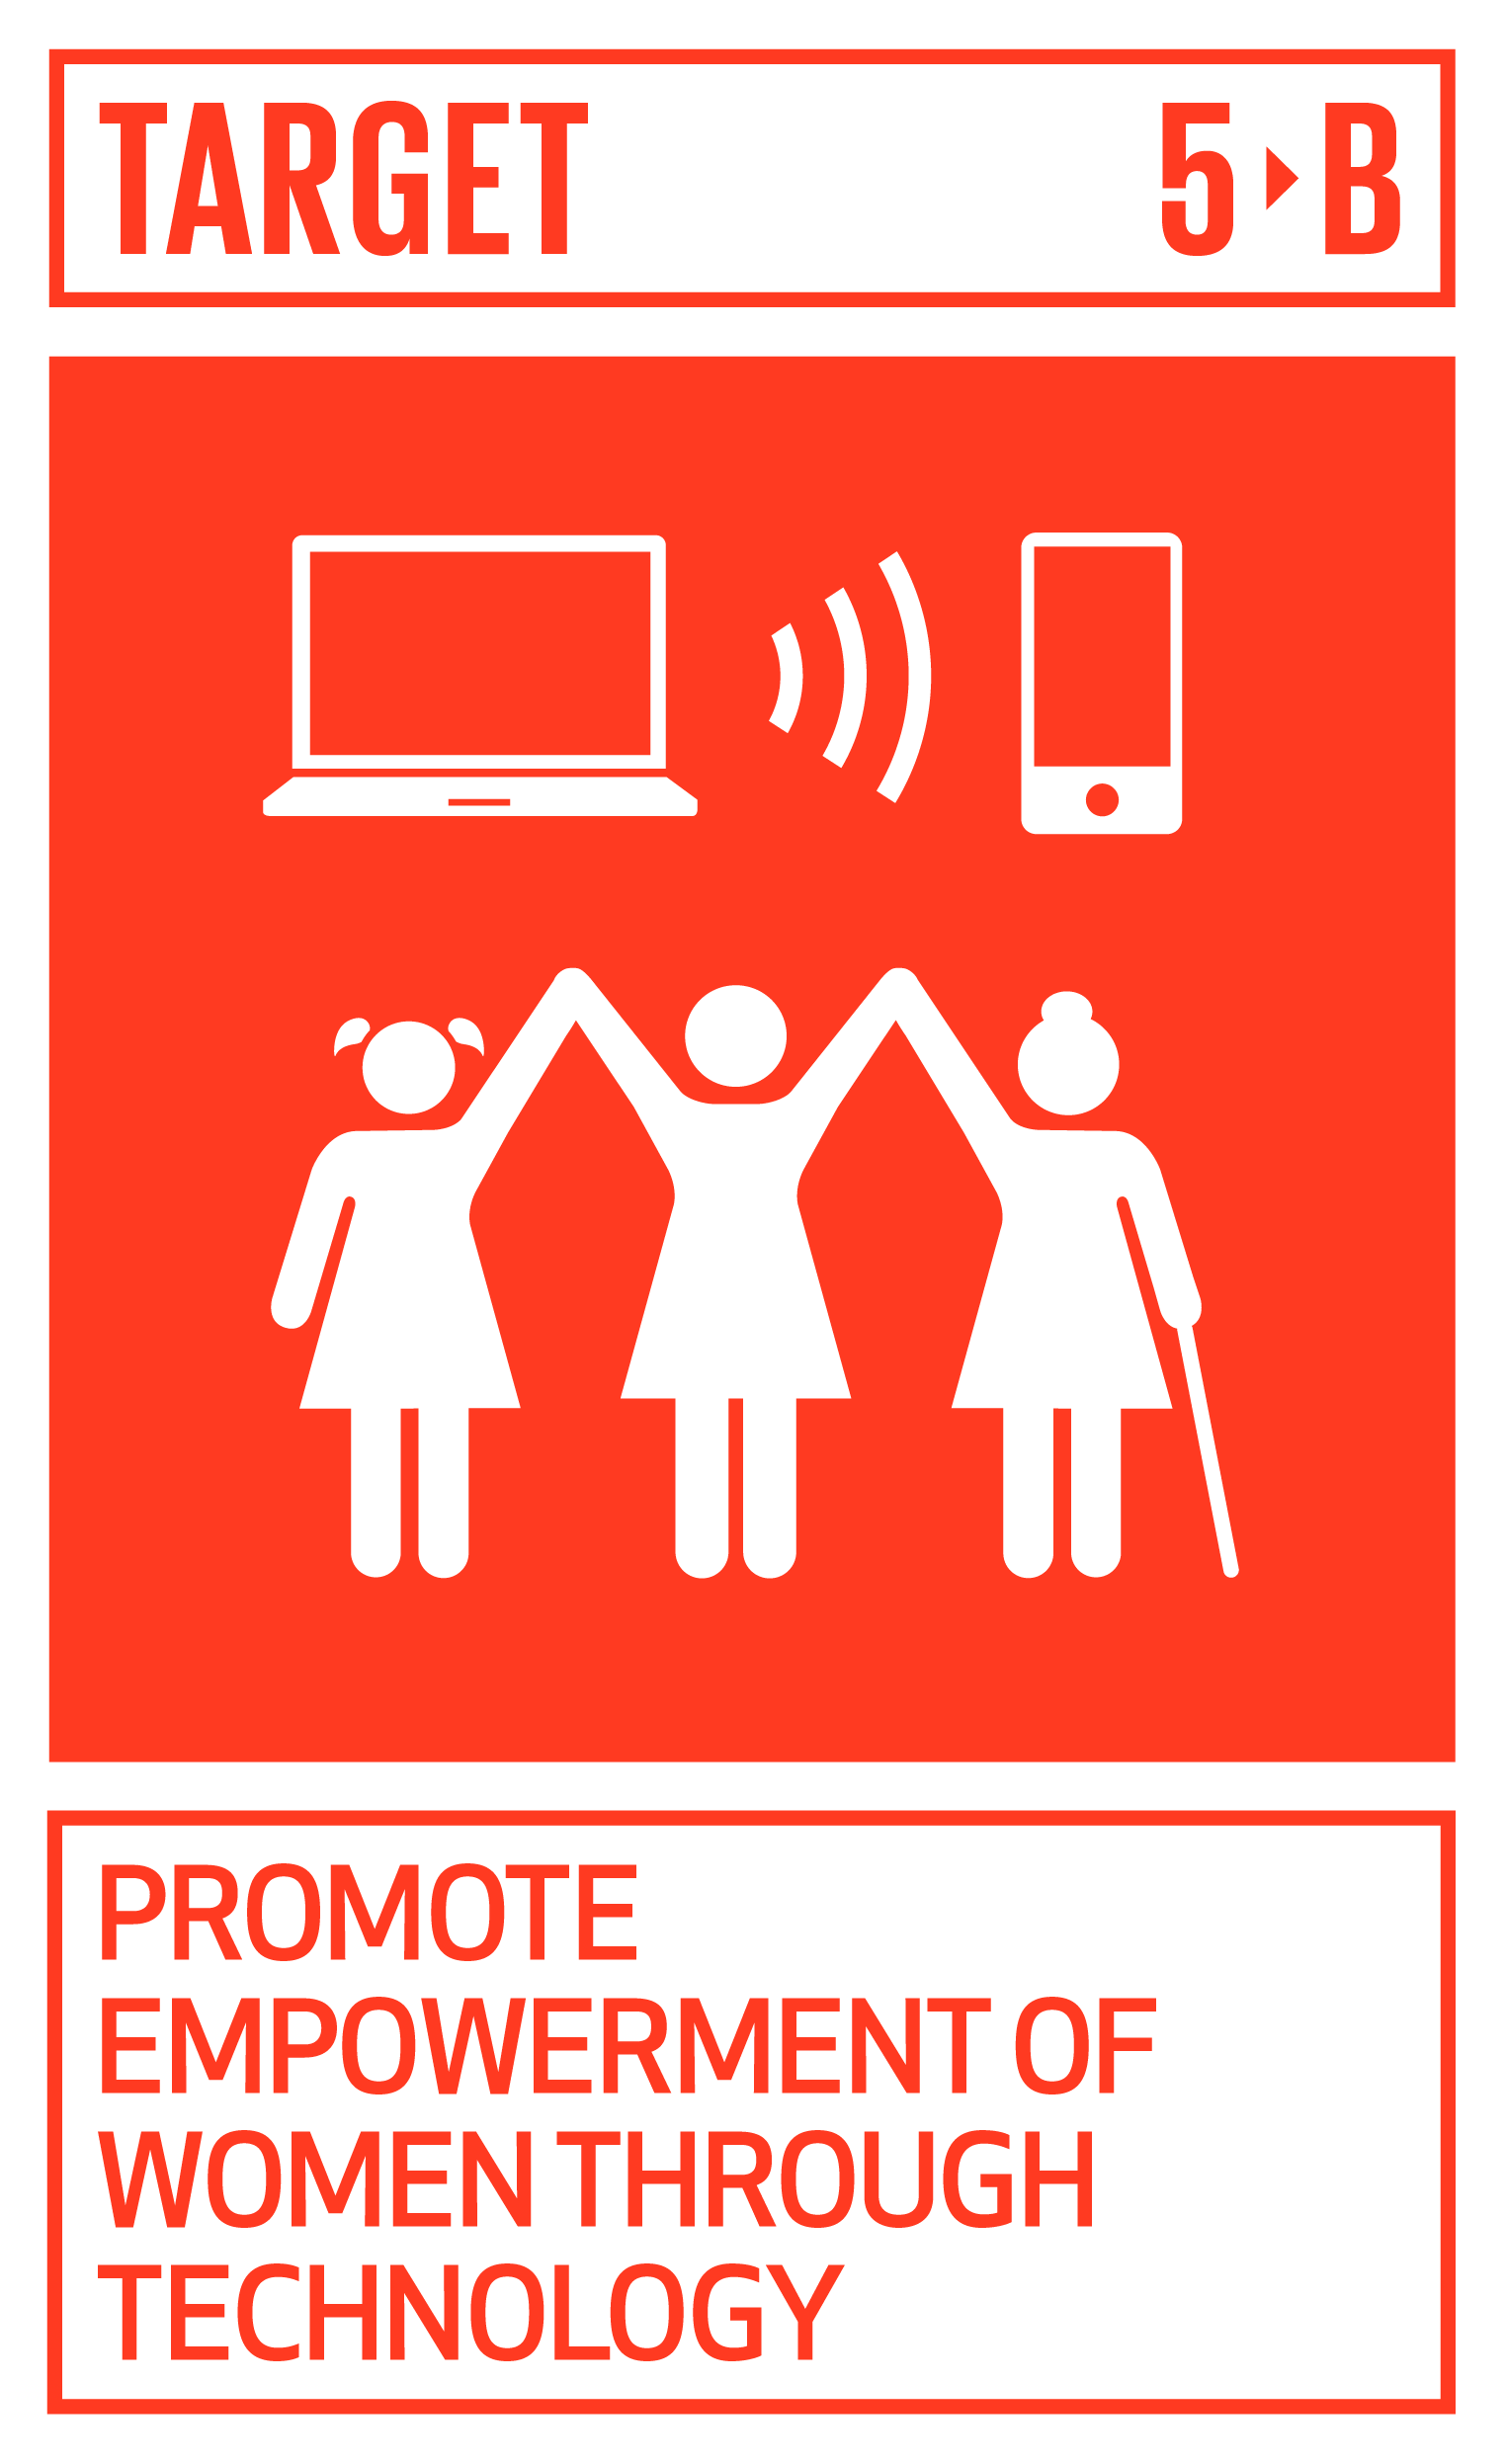 Goal,target,永續發展目標SDGs5,目標5.B通過科技促進賦予婦女權力